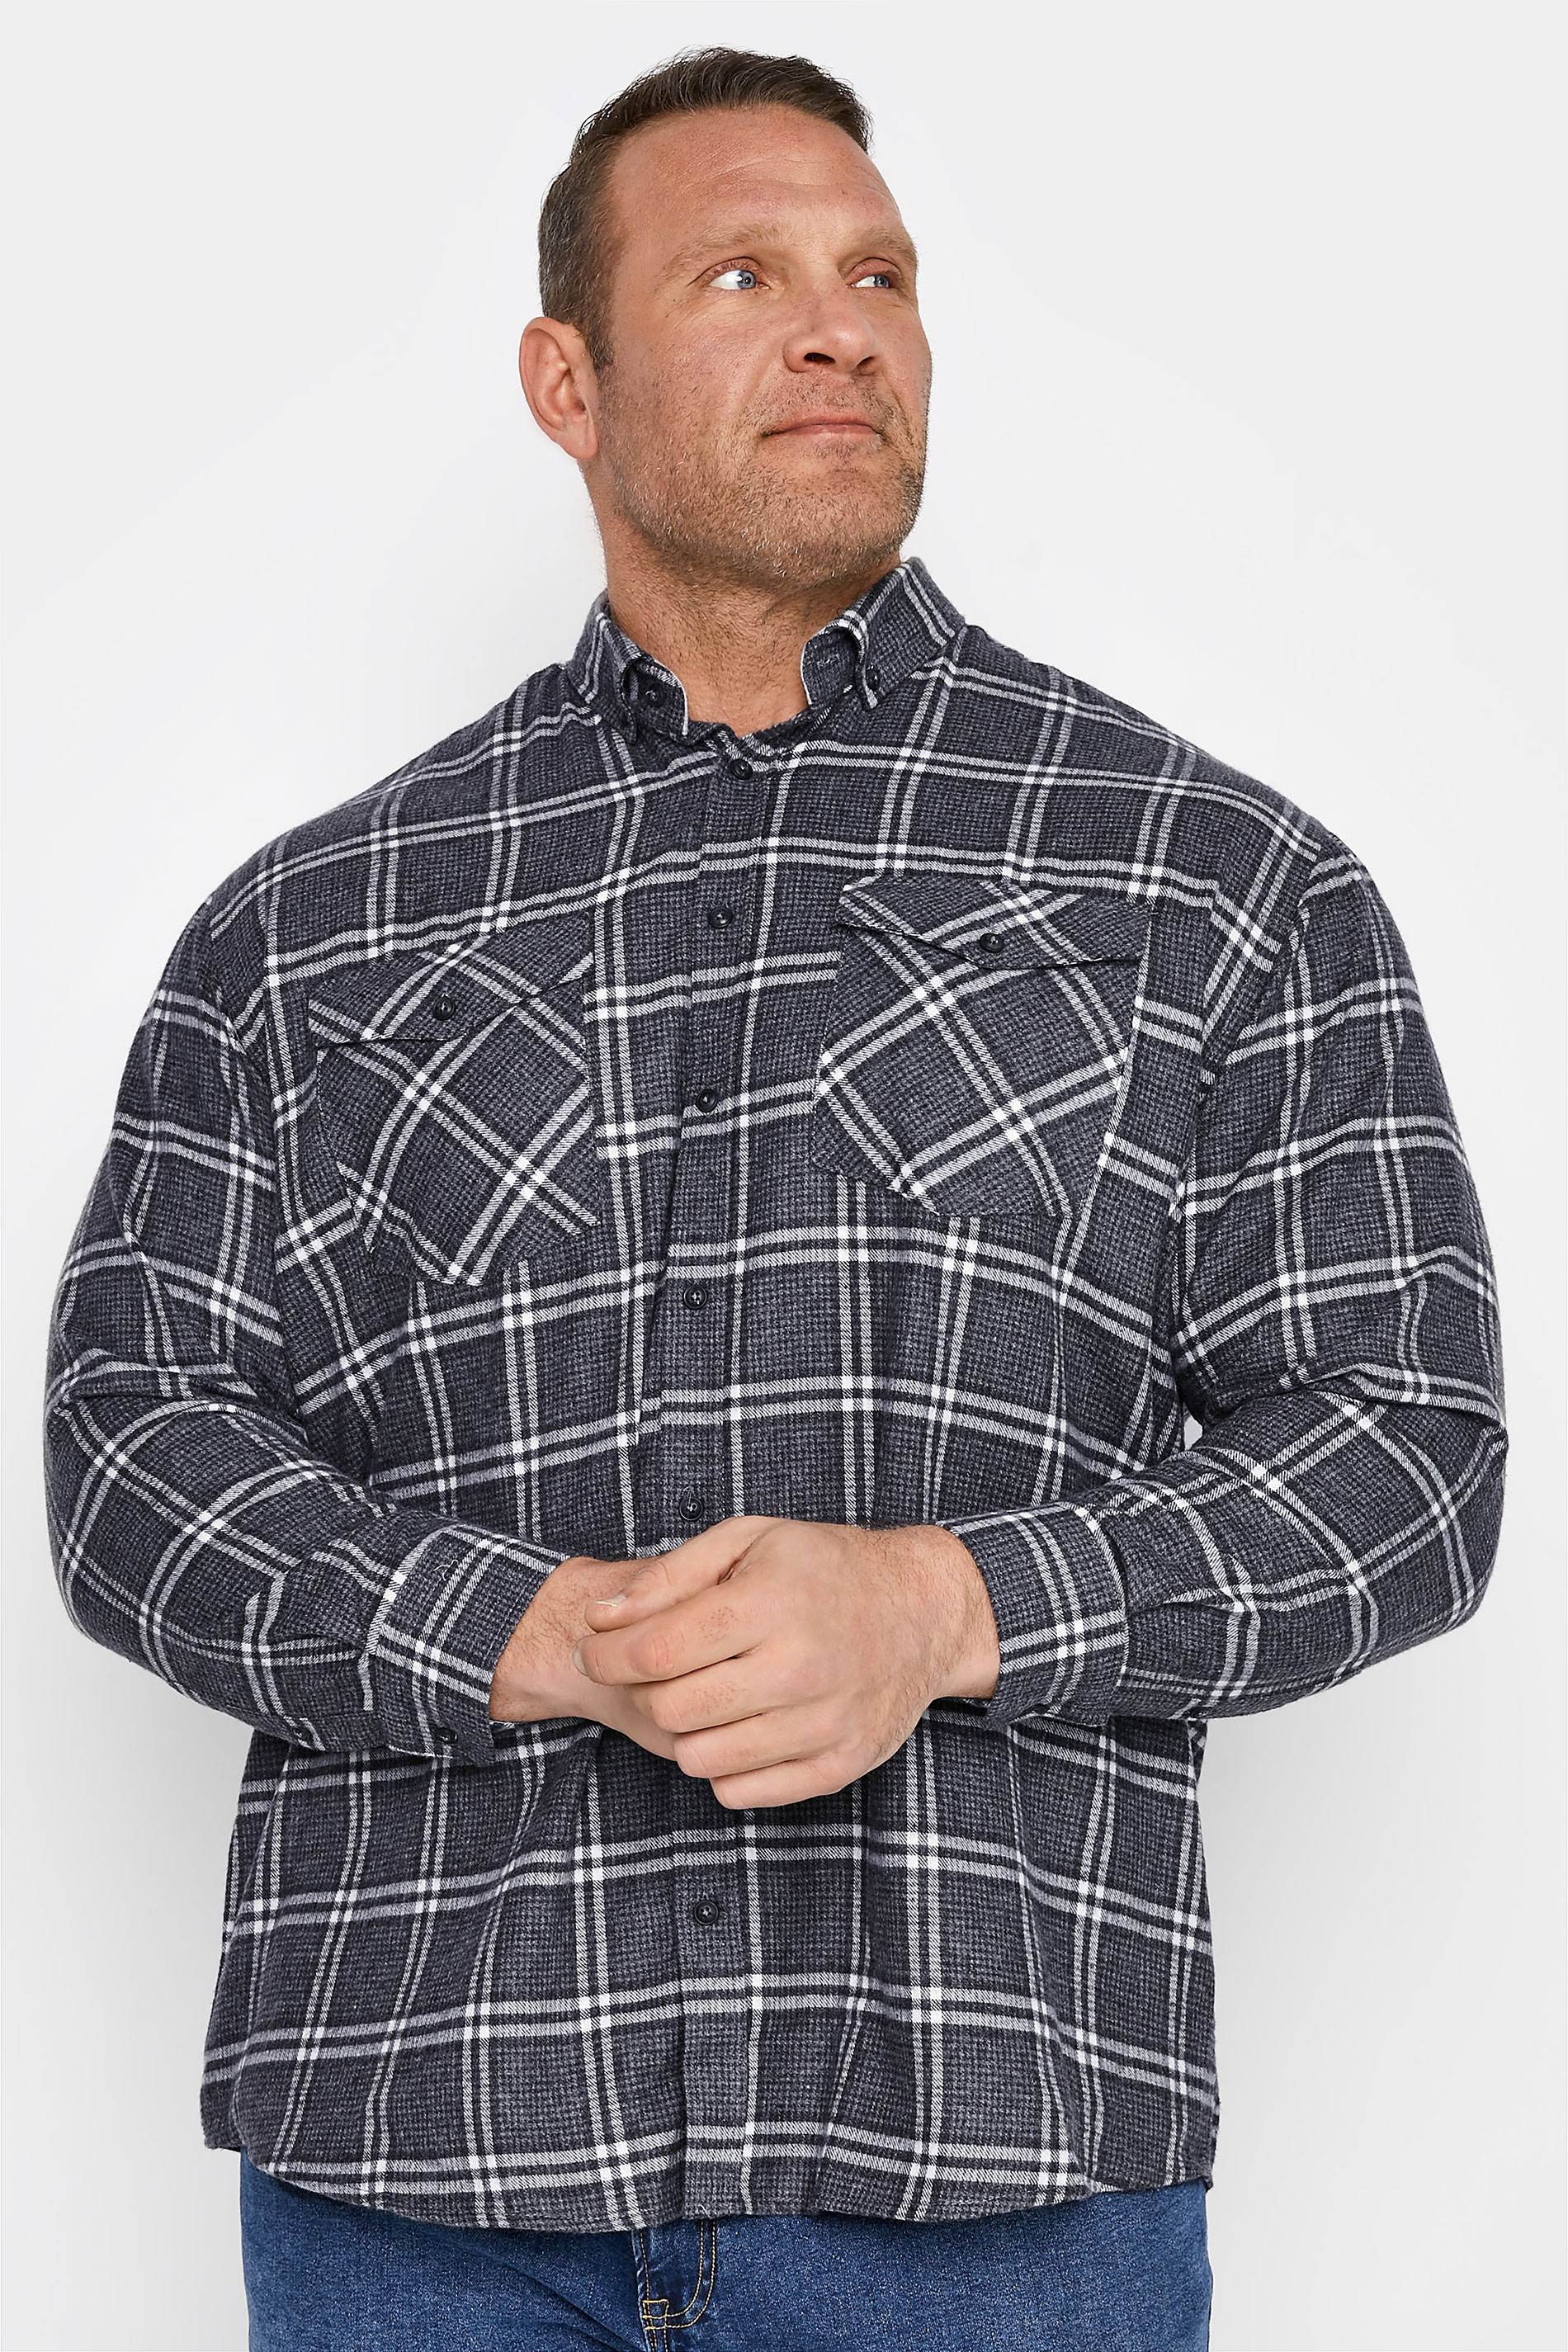 KAM Charcoal Grey Flannel Check Shirt_M.jpg